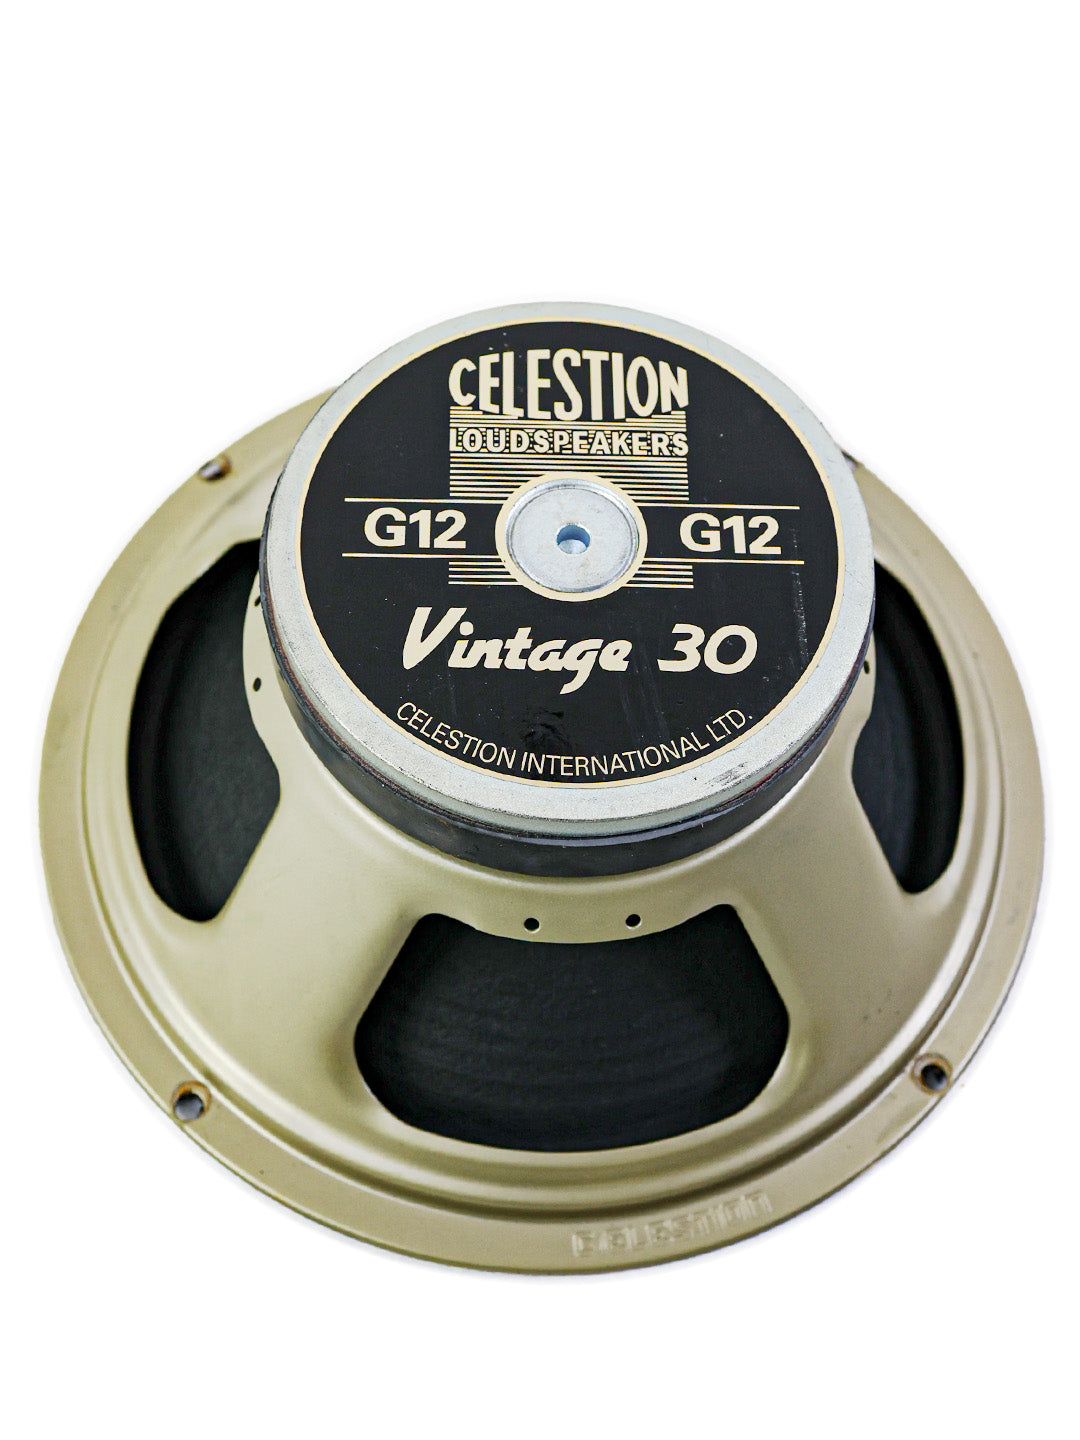 CELESTION(セレッション) Vintage30 V30 Made in England(英国製) 16Ω 2個セット - 楽器、器材